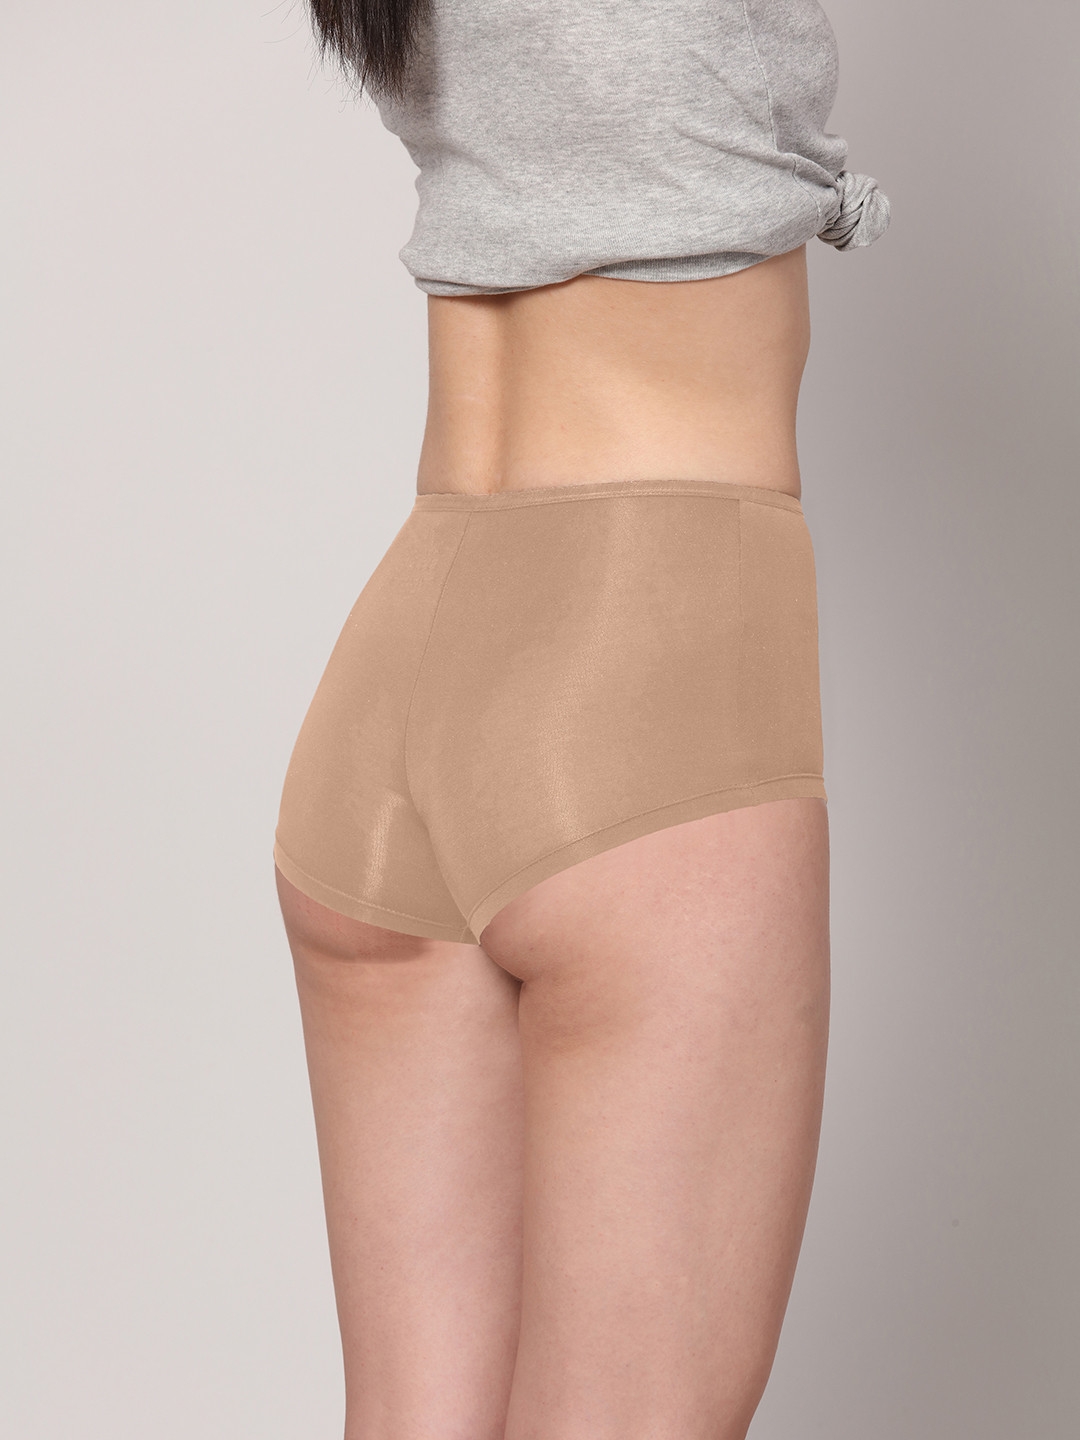 AshleyandAlvis | AshleyandAlvis Women's Panties Micro Modal, Anti Bacterial, Skinny Soft, Premium Boys Leg  -No Itching, Sweat Proof, Double In-seam Gusset 4